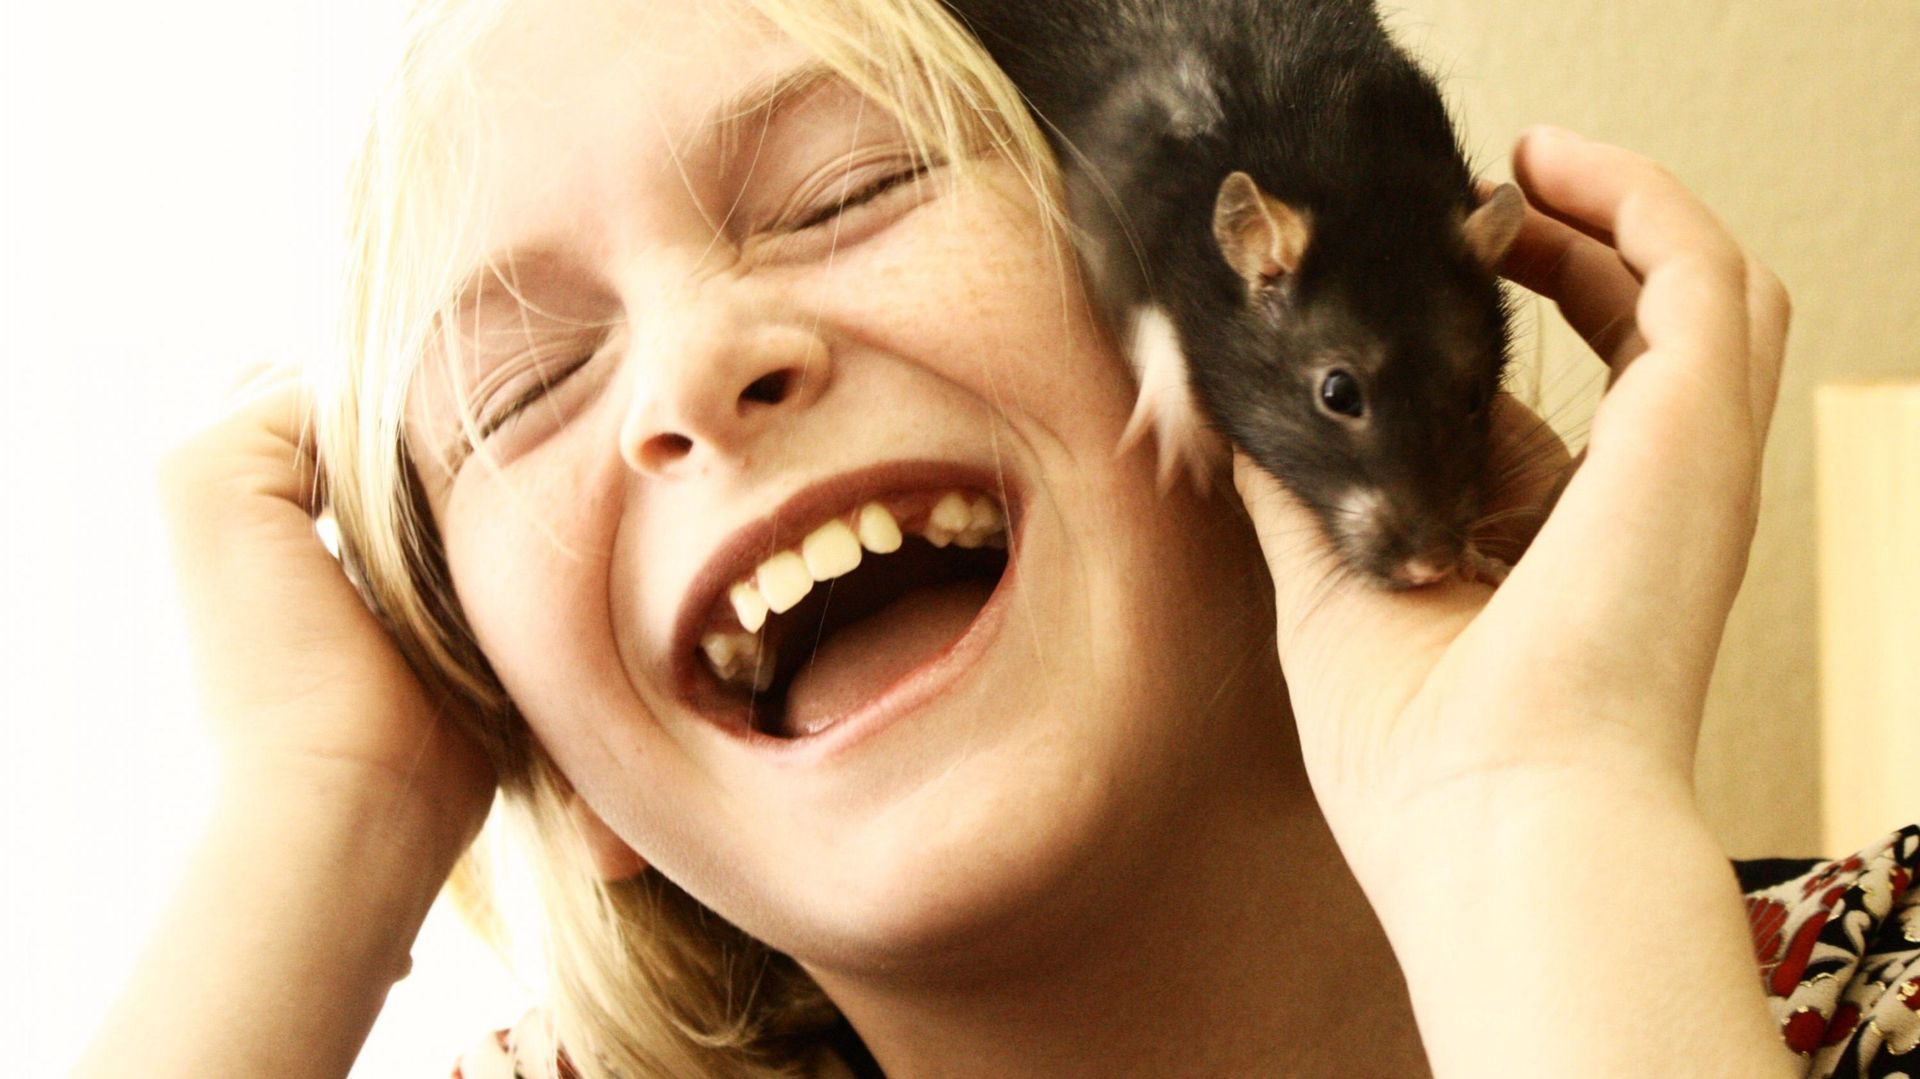 Adopter un rat, c'est vraiment une super idée